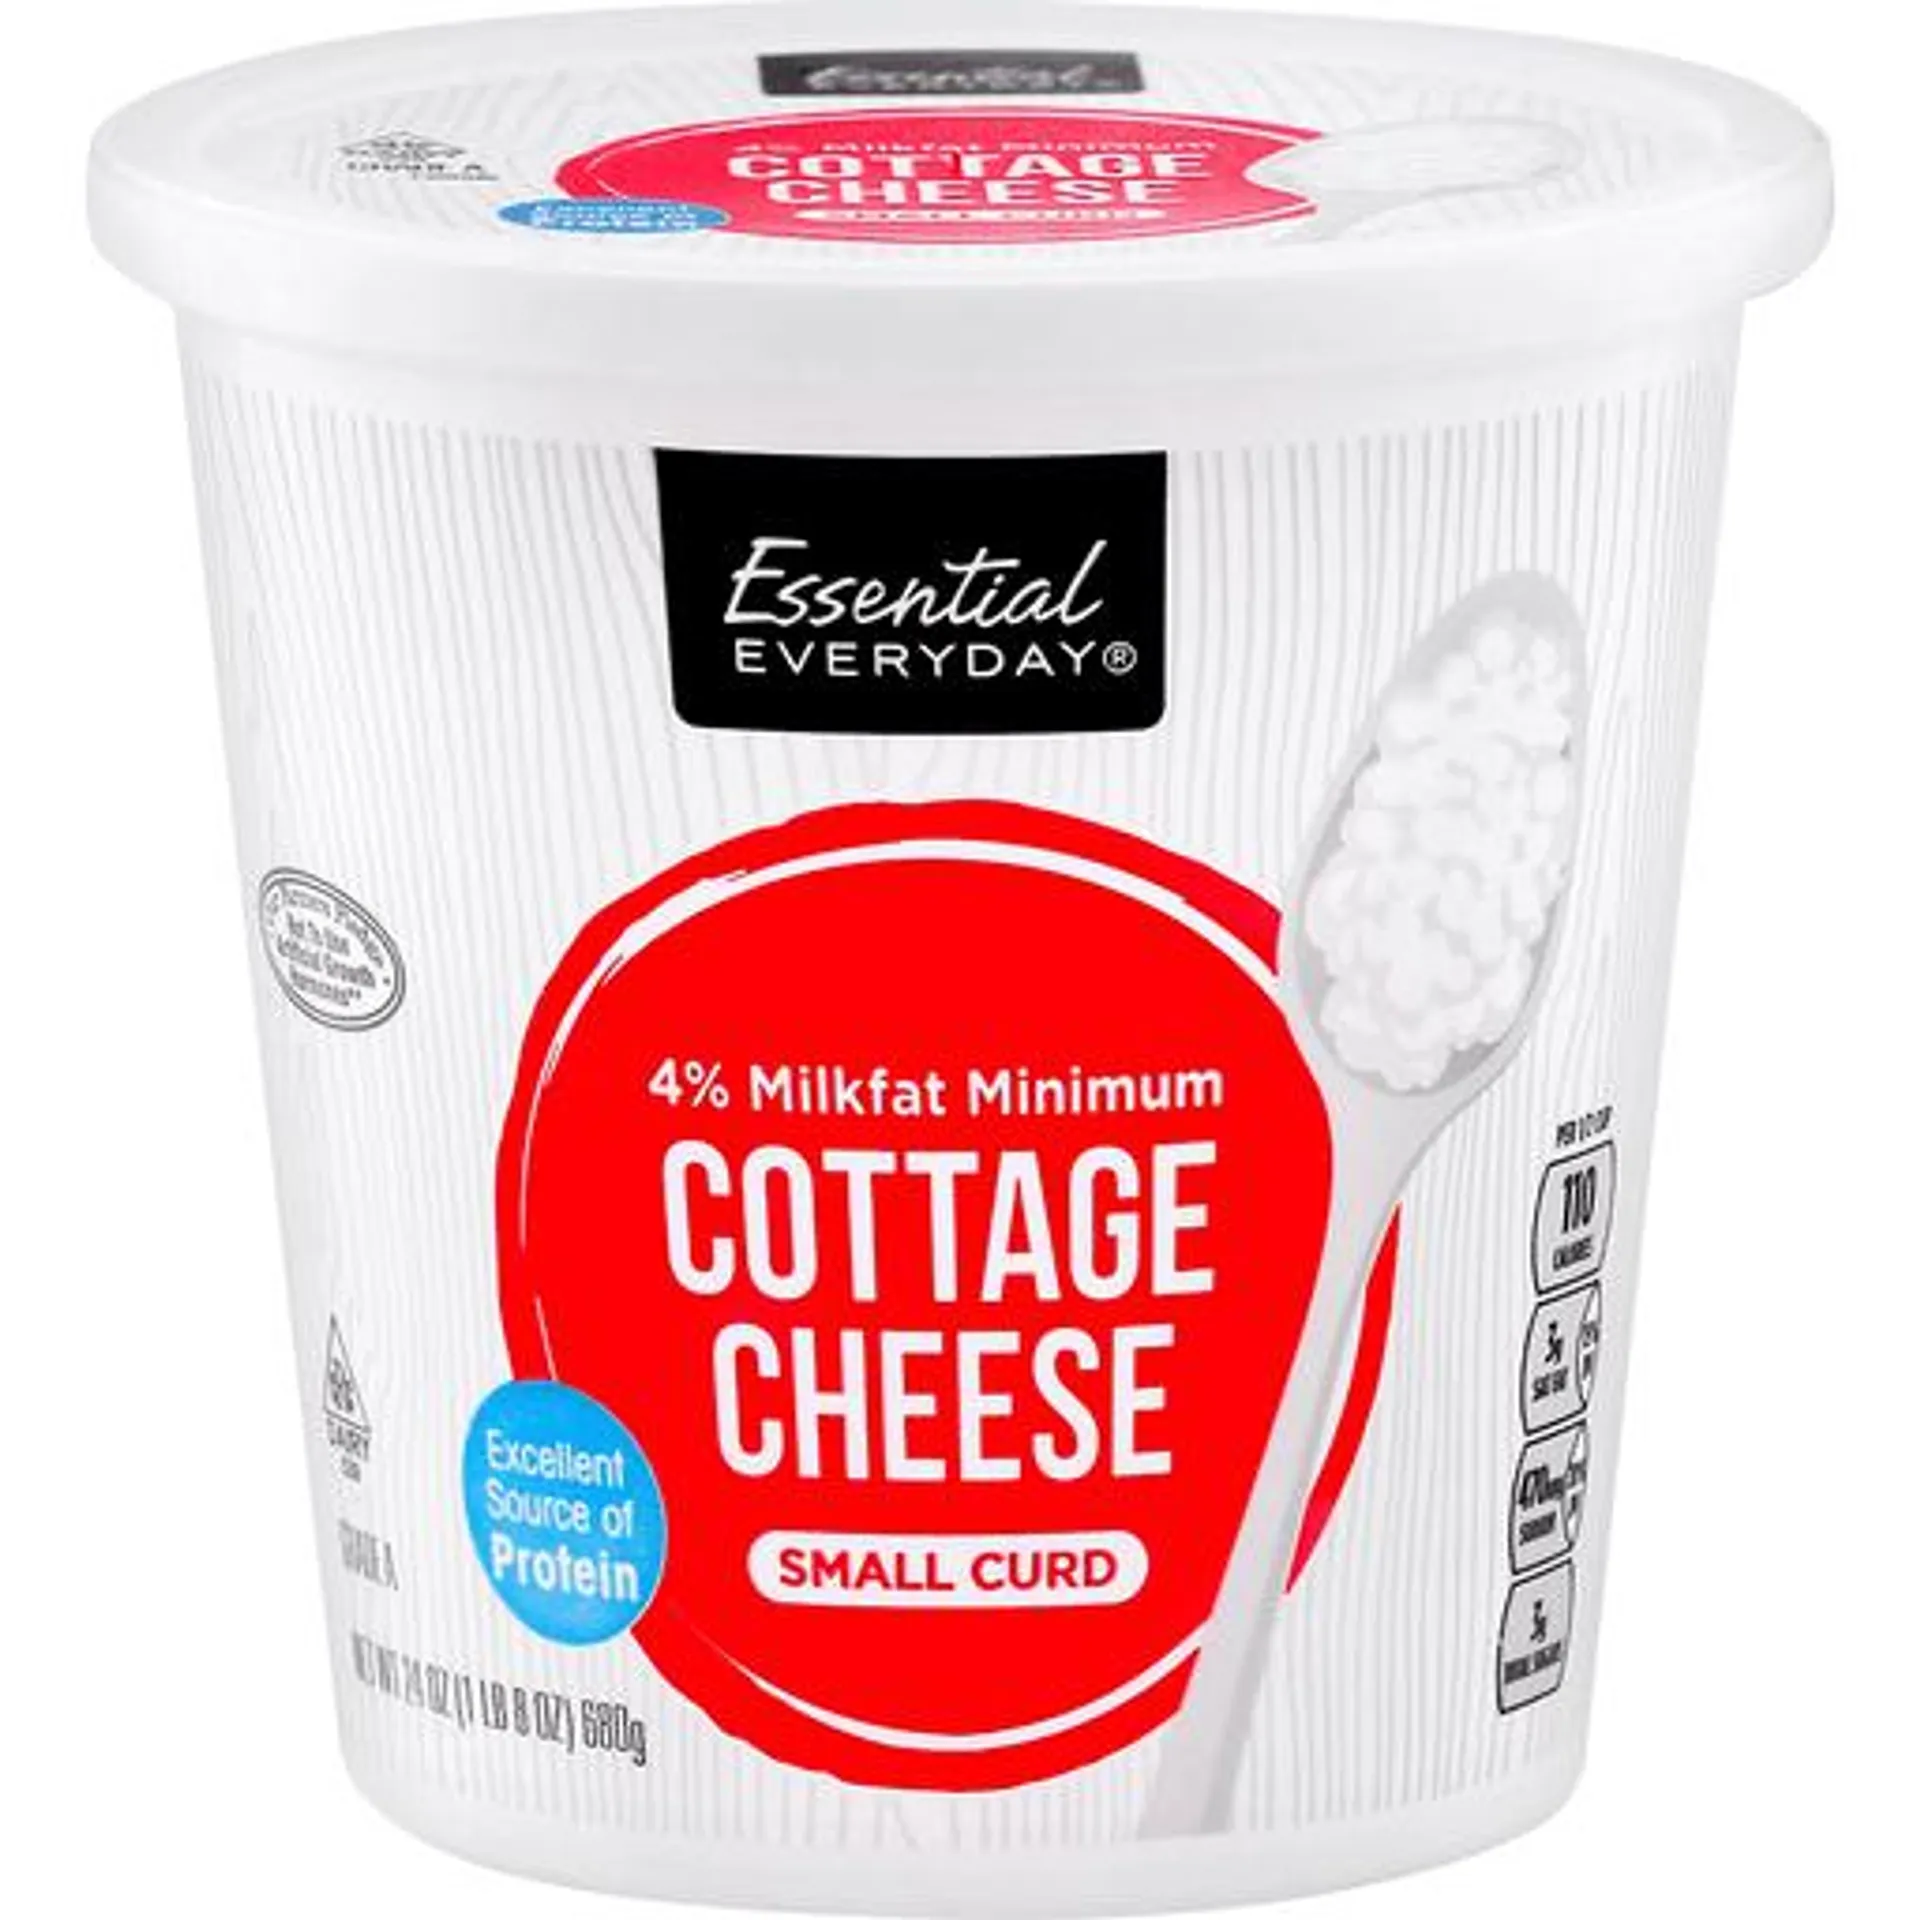 Essential Everyday Cottage Cheese, Small Curd, 4% Milkfat Minimum